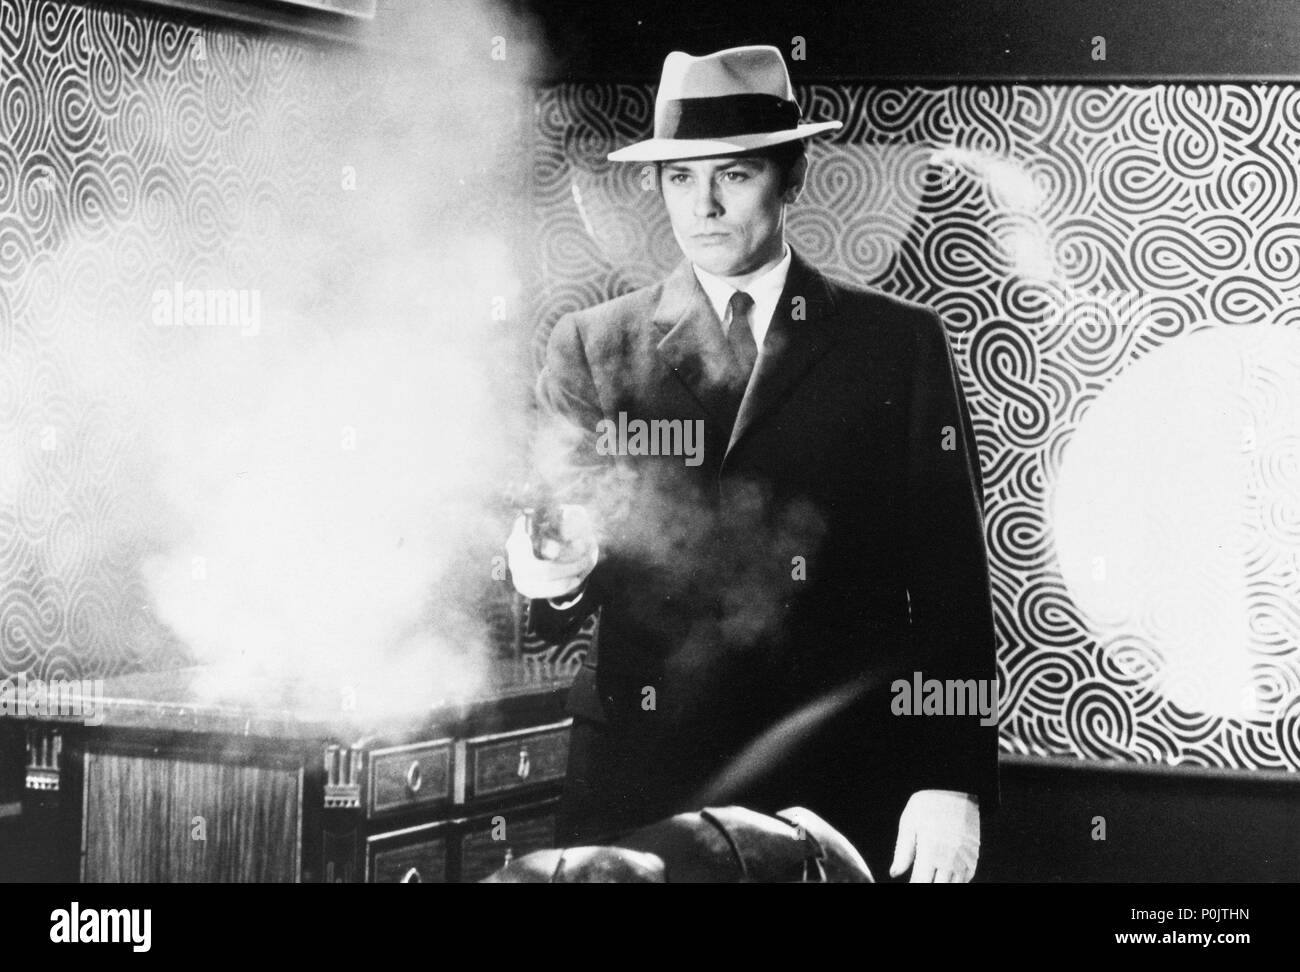 Original Film Title: LE SAMOURAI.  English Title: GODSON, THE.  Film Director: JEAN-PIERRE MELVILLE.  Year: 1967.  Stars: ALAIN DELON. Credit: PATHE / Album Stock Photo